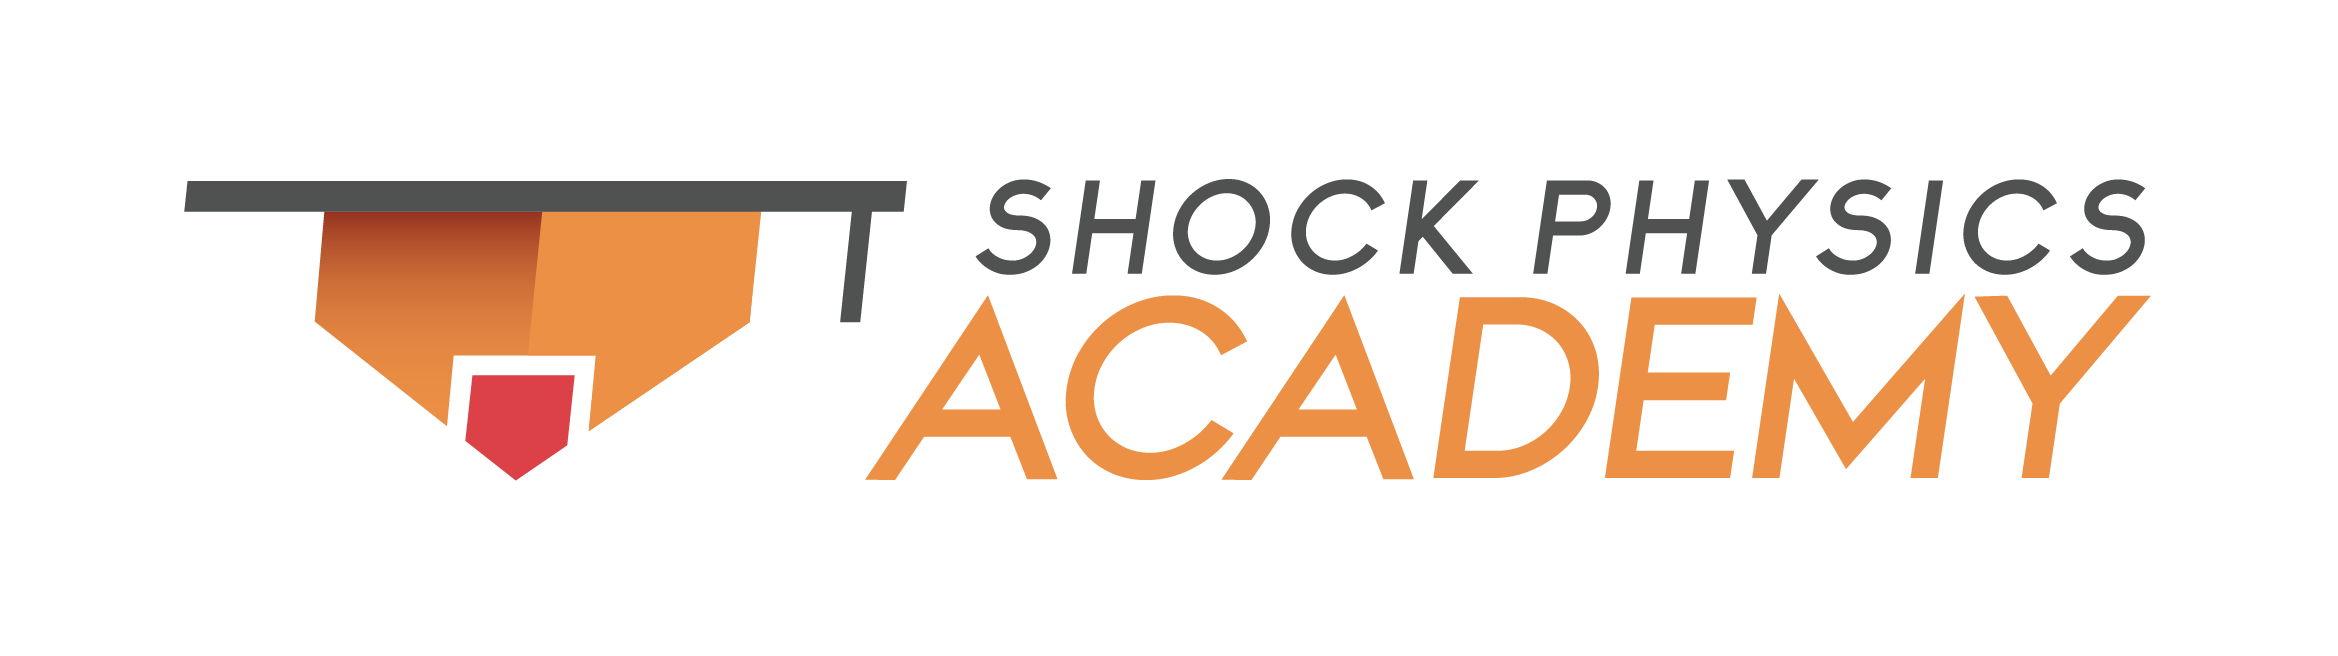 Shock Physics Academy